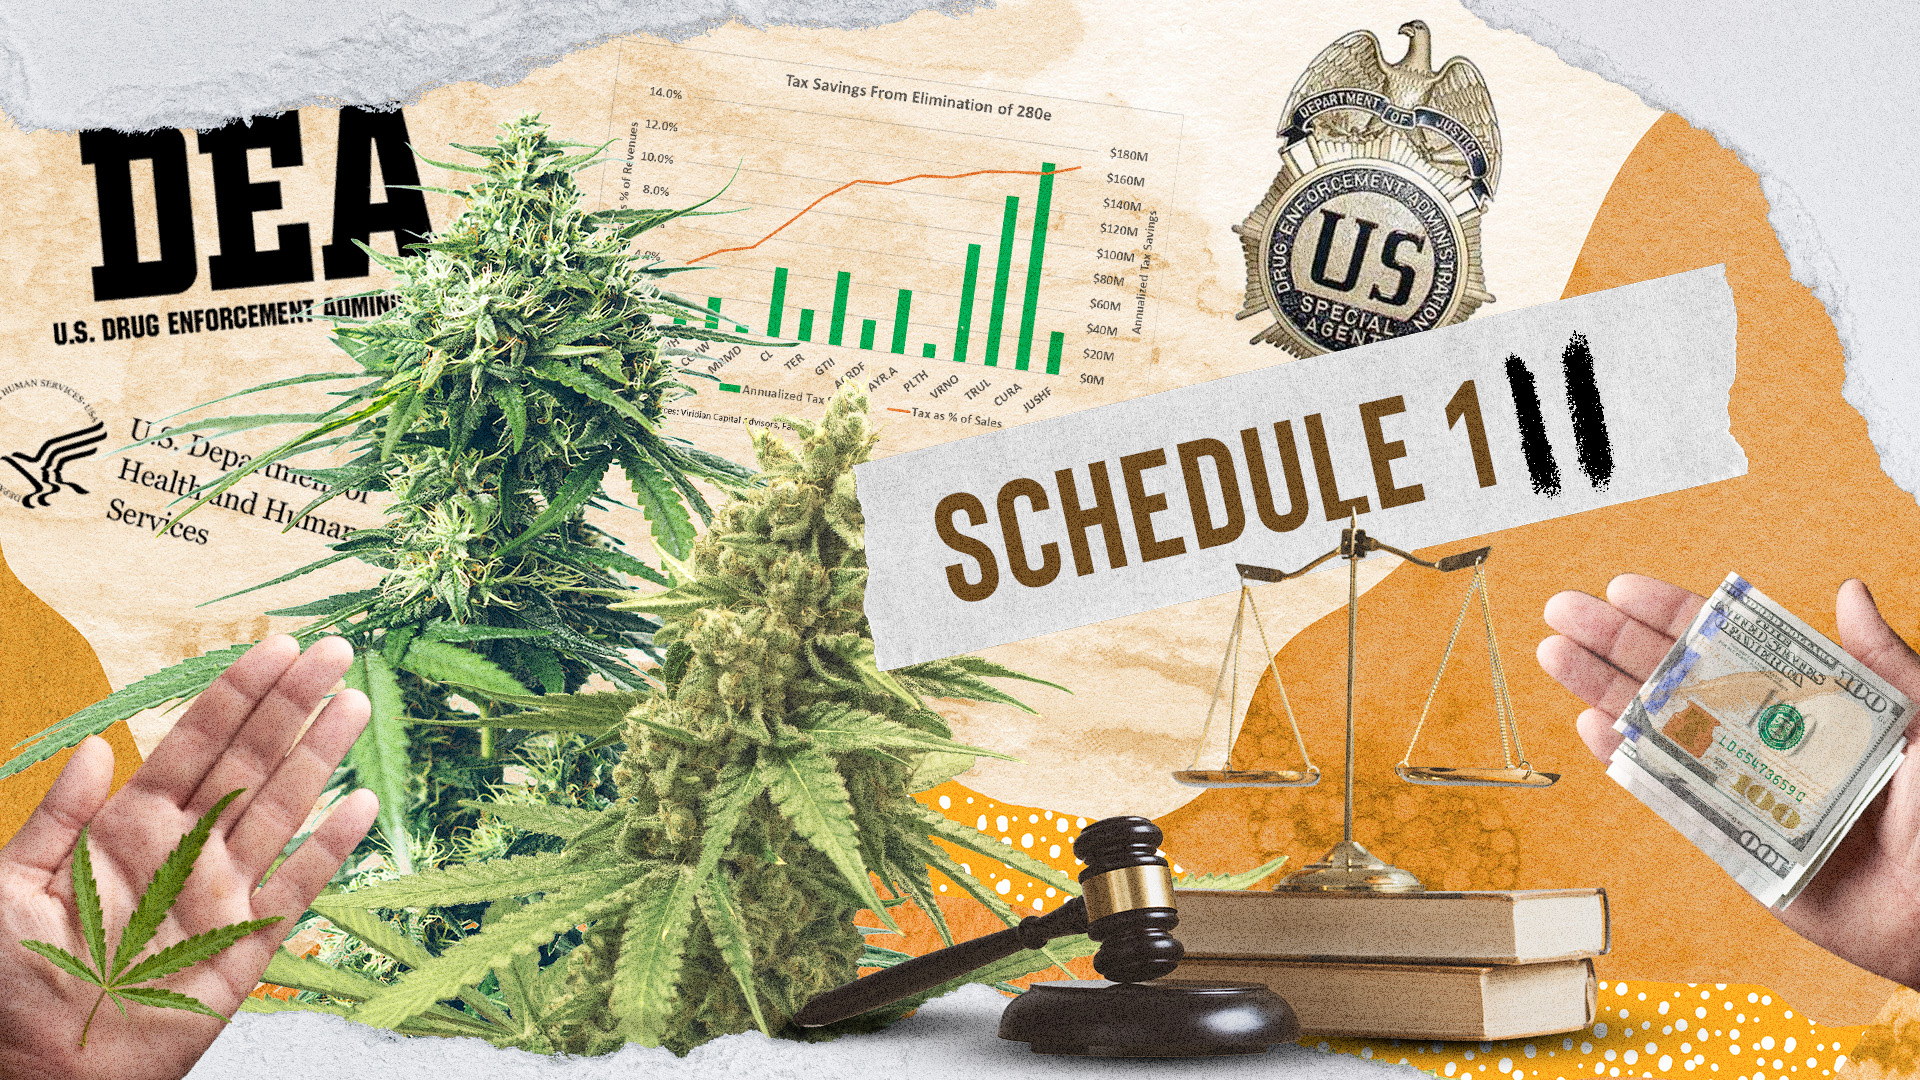 rescheduling cannabis